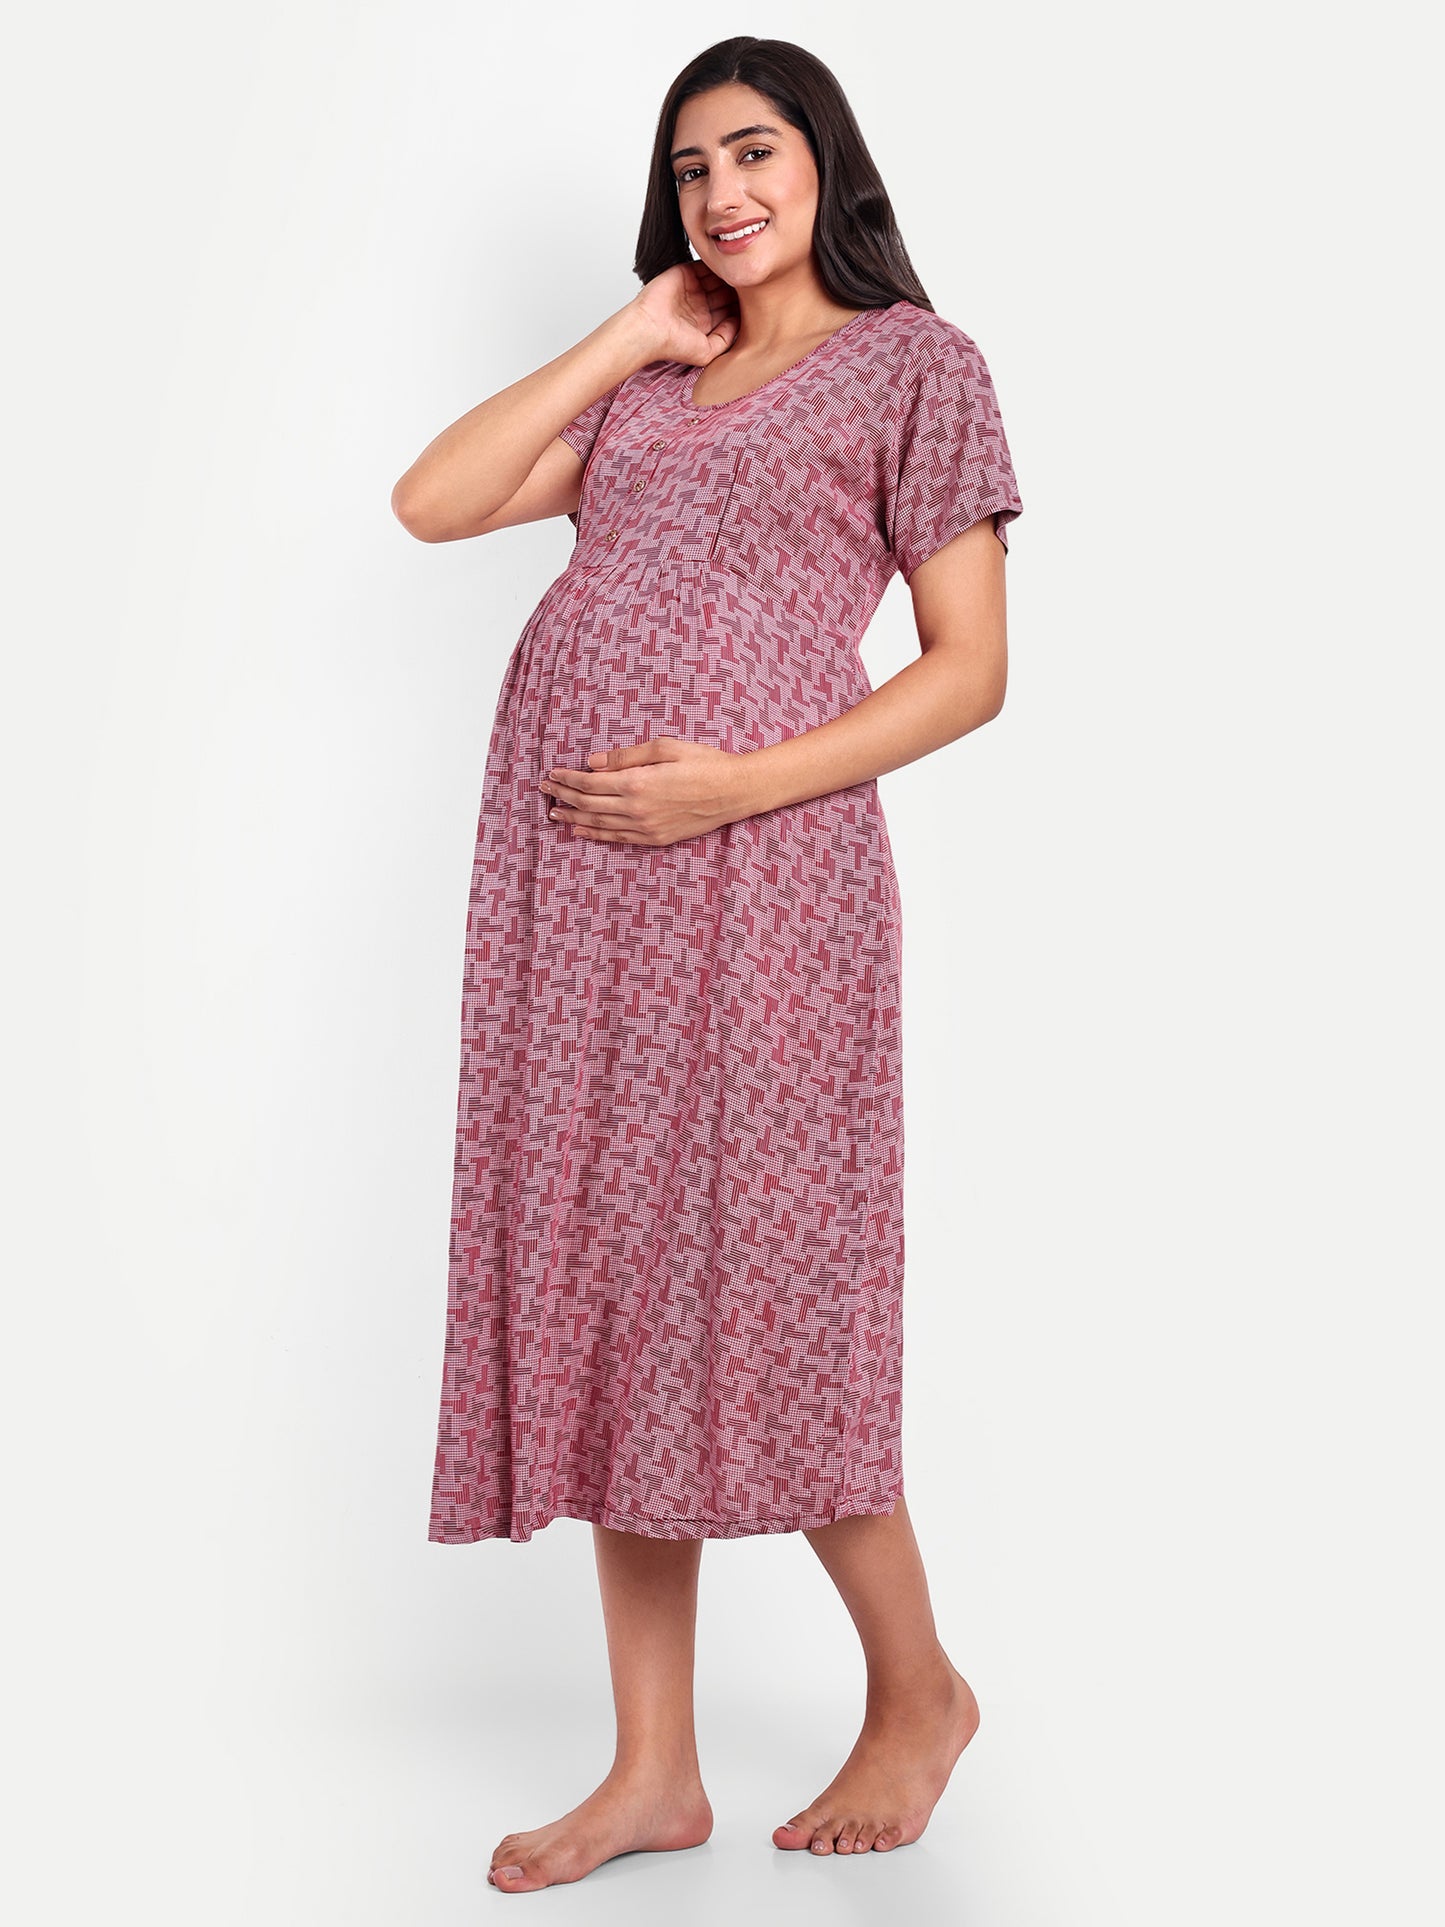 Carmine maternity and feeding dress